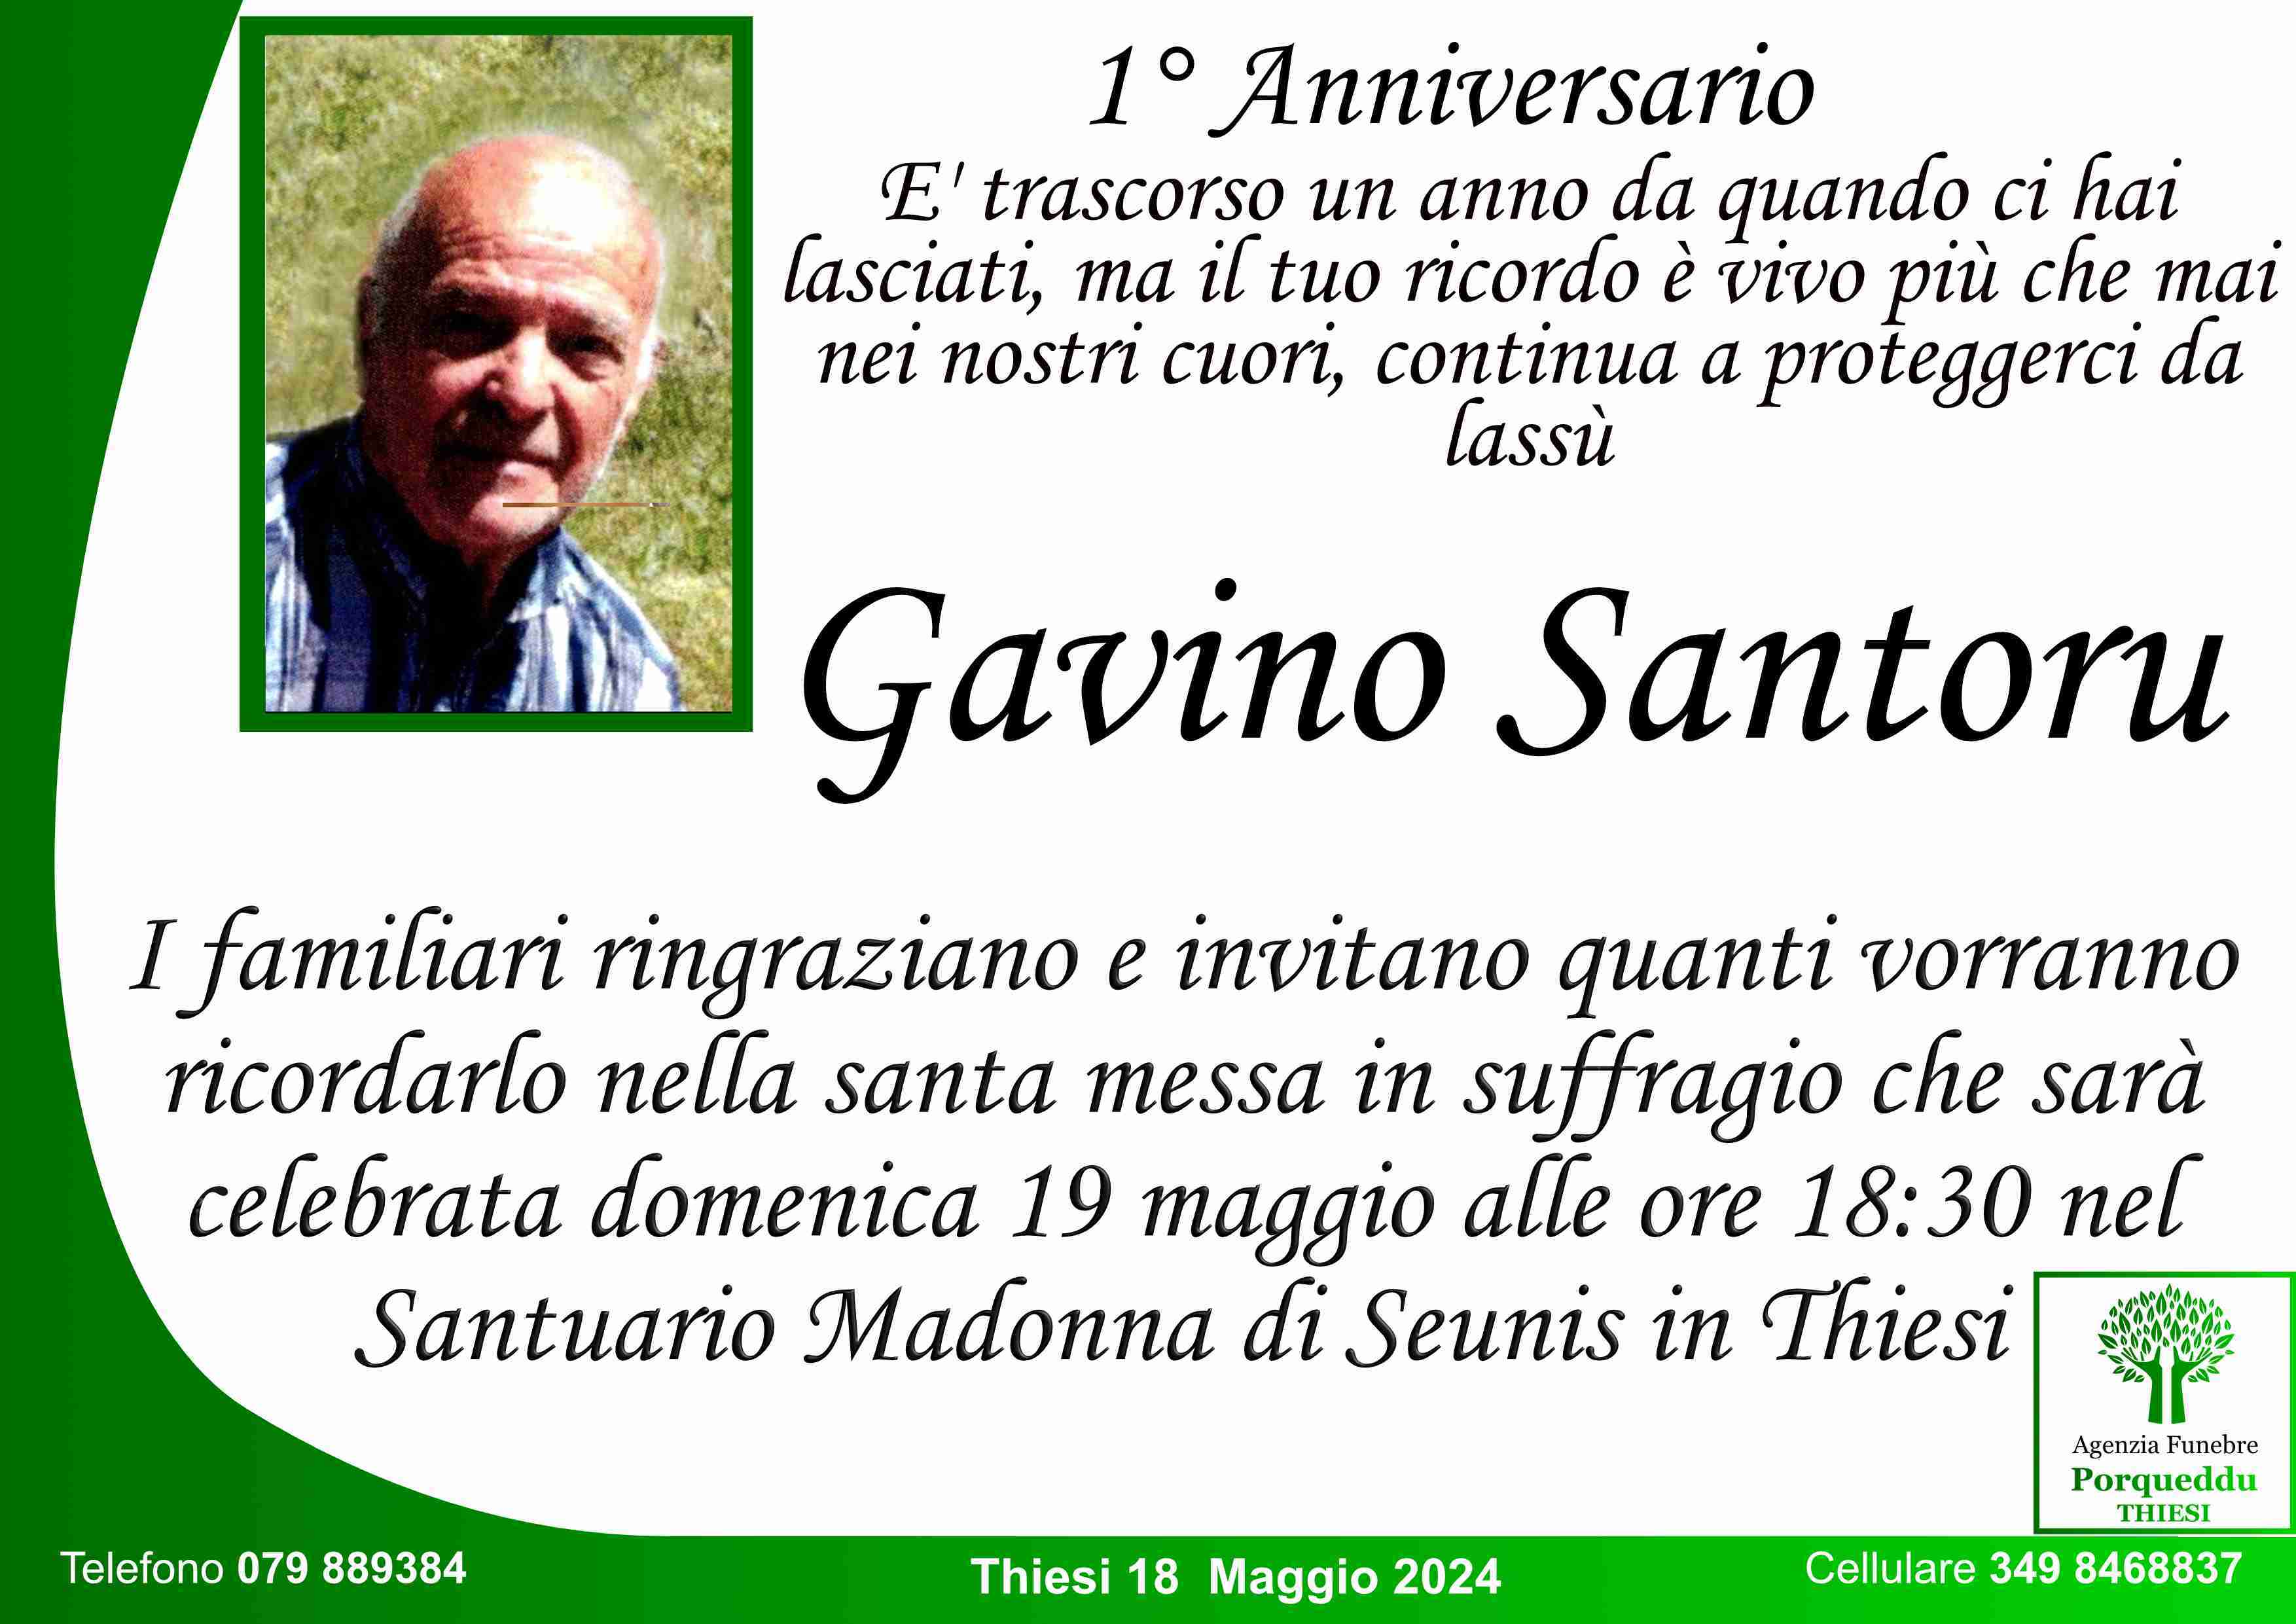 Gavino Santoru